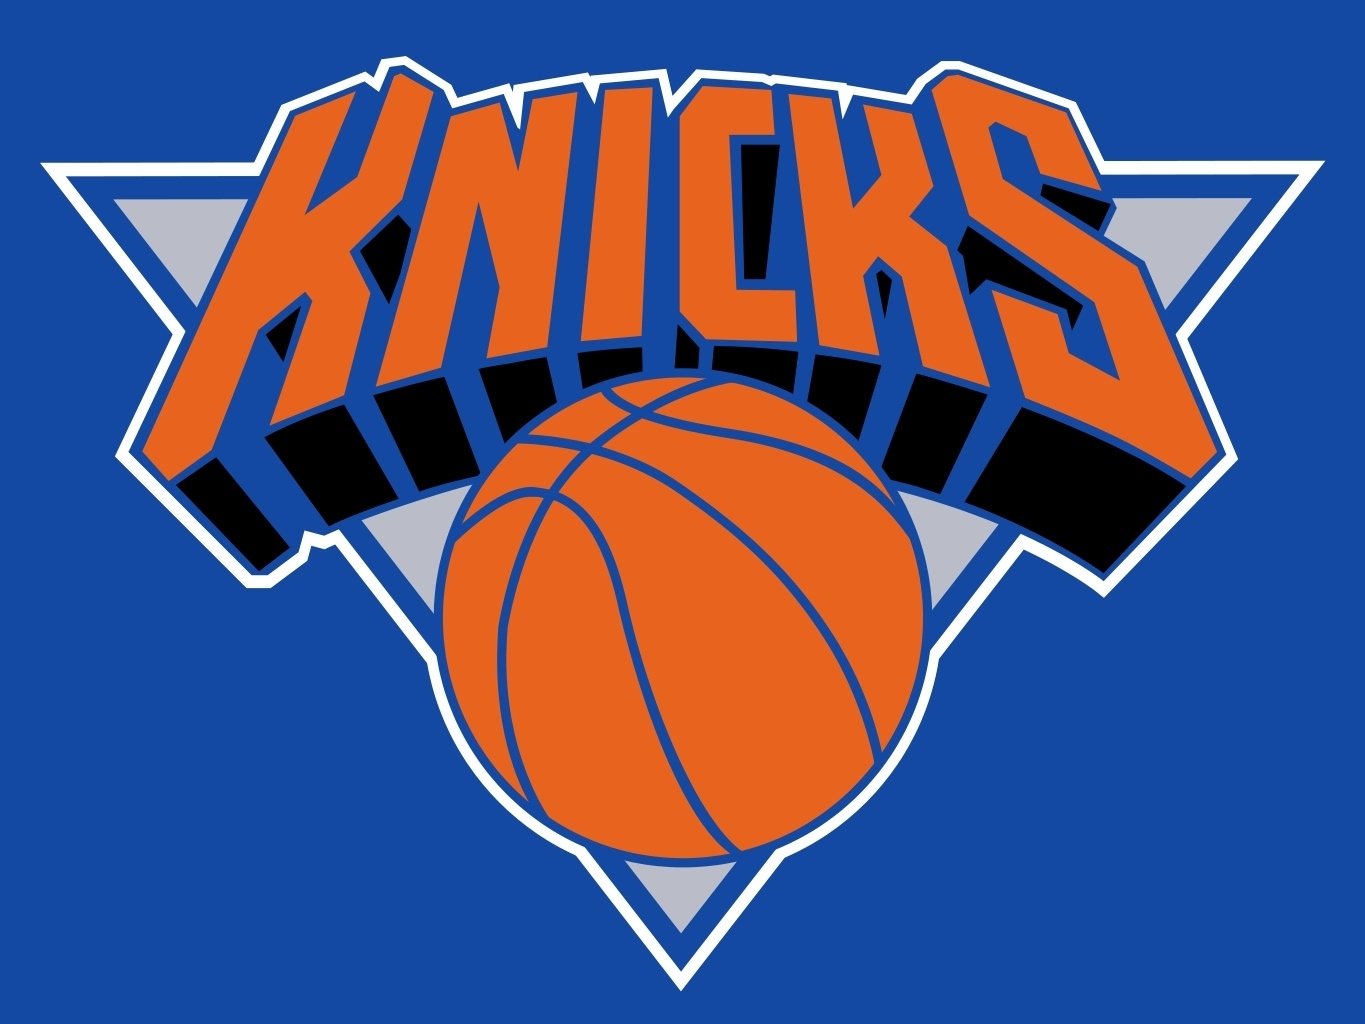 New York Knicks Fond d'écran and Arrière-Plan | 1365x1024 ...